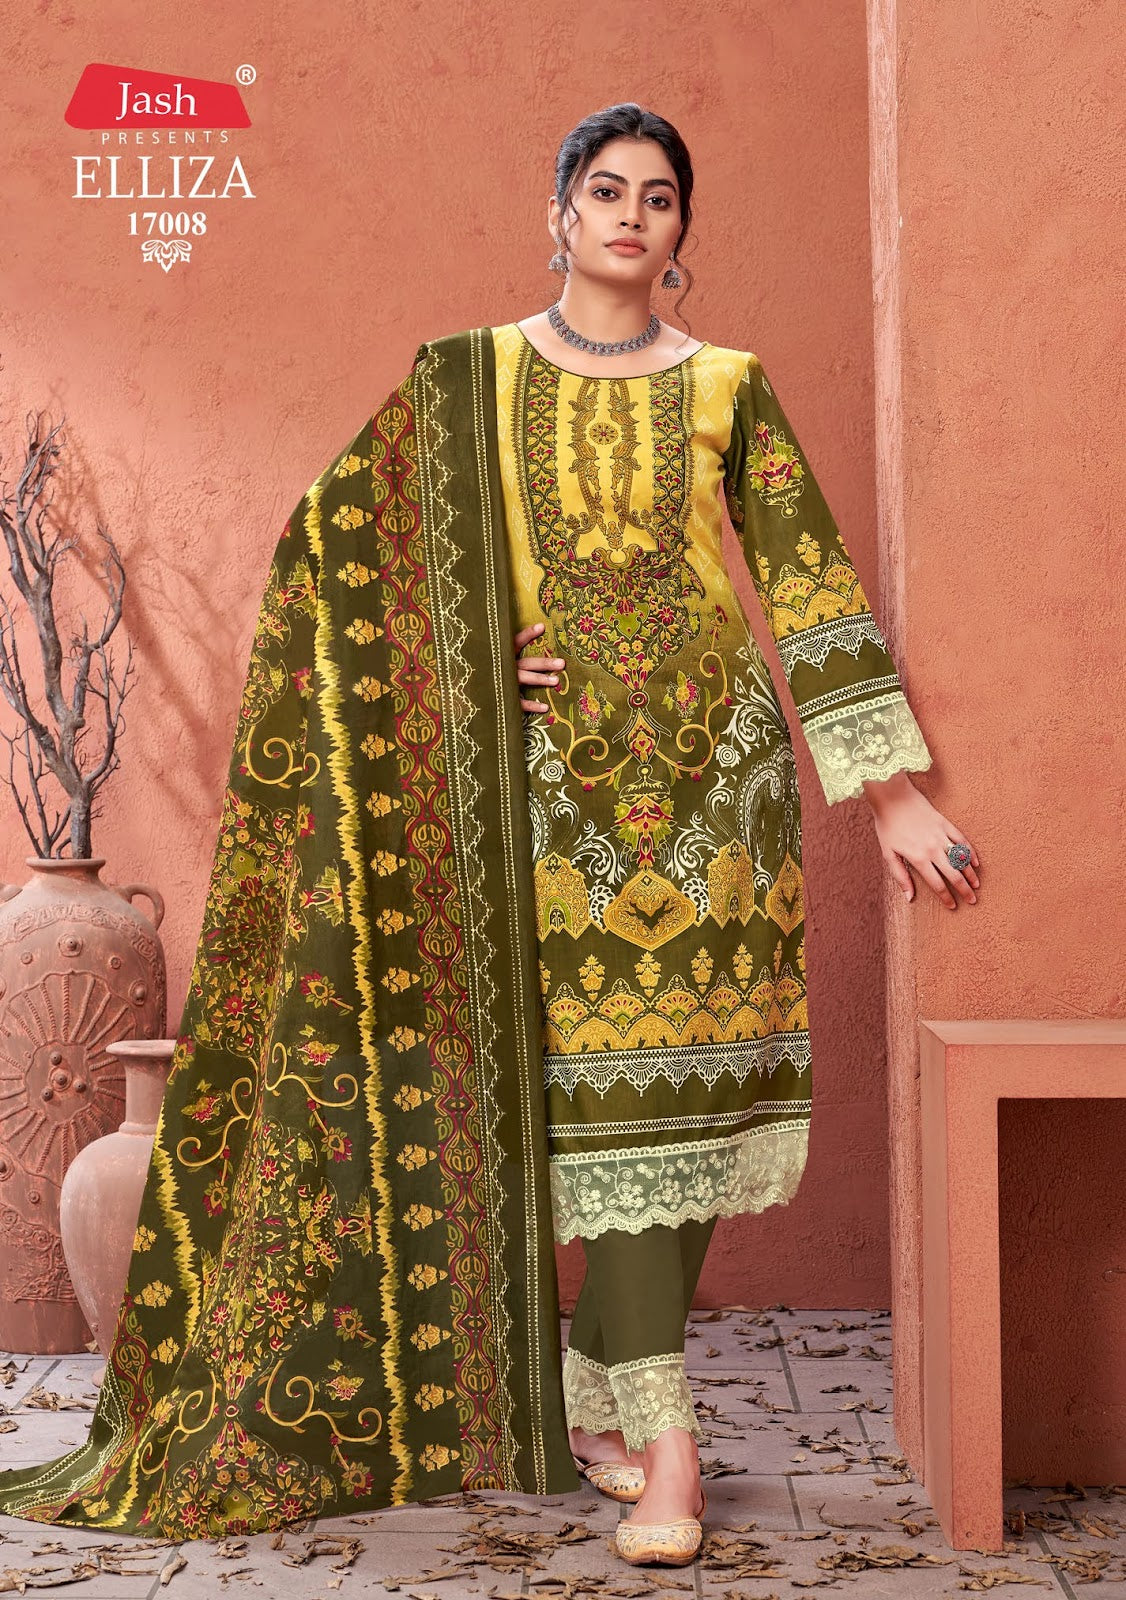 Elliza Vol 17 Jash Karachi Salwar Suits